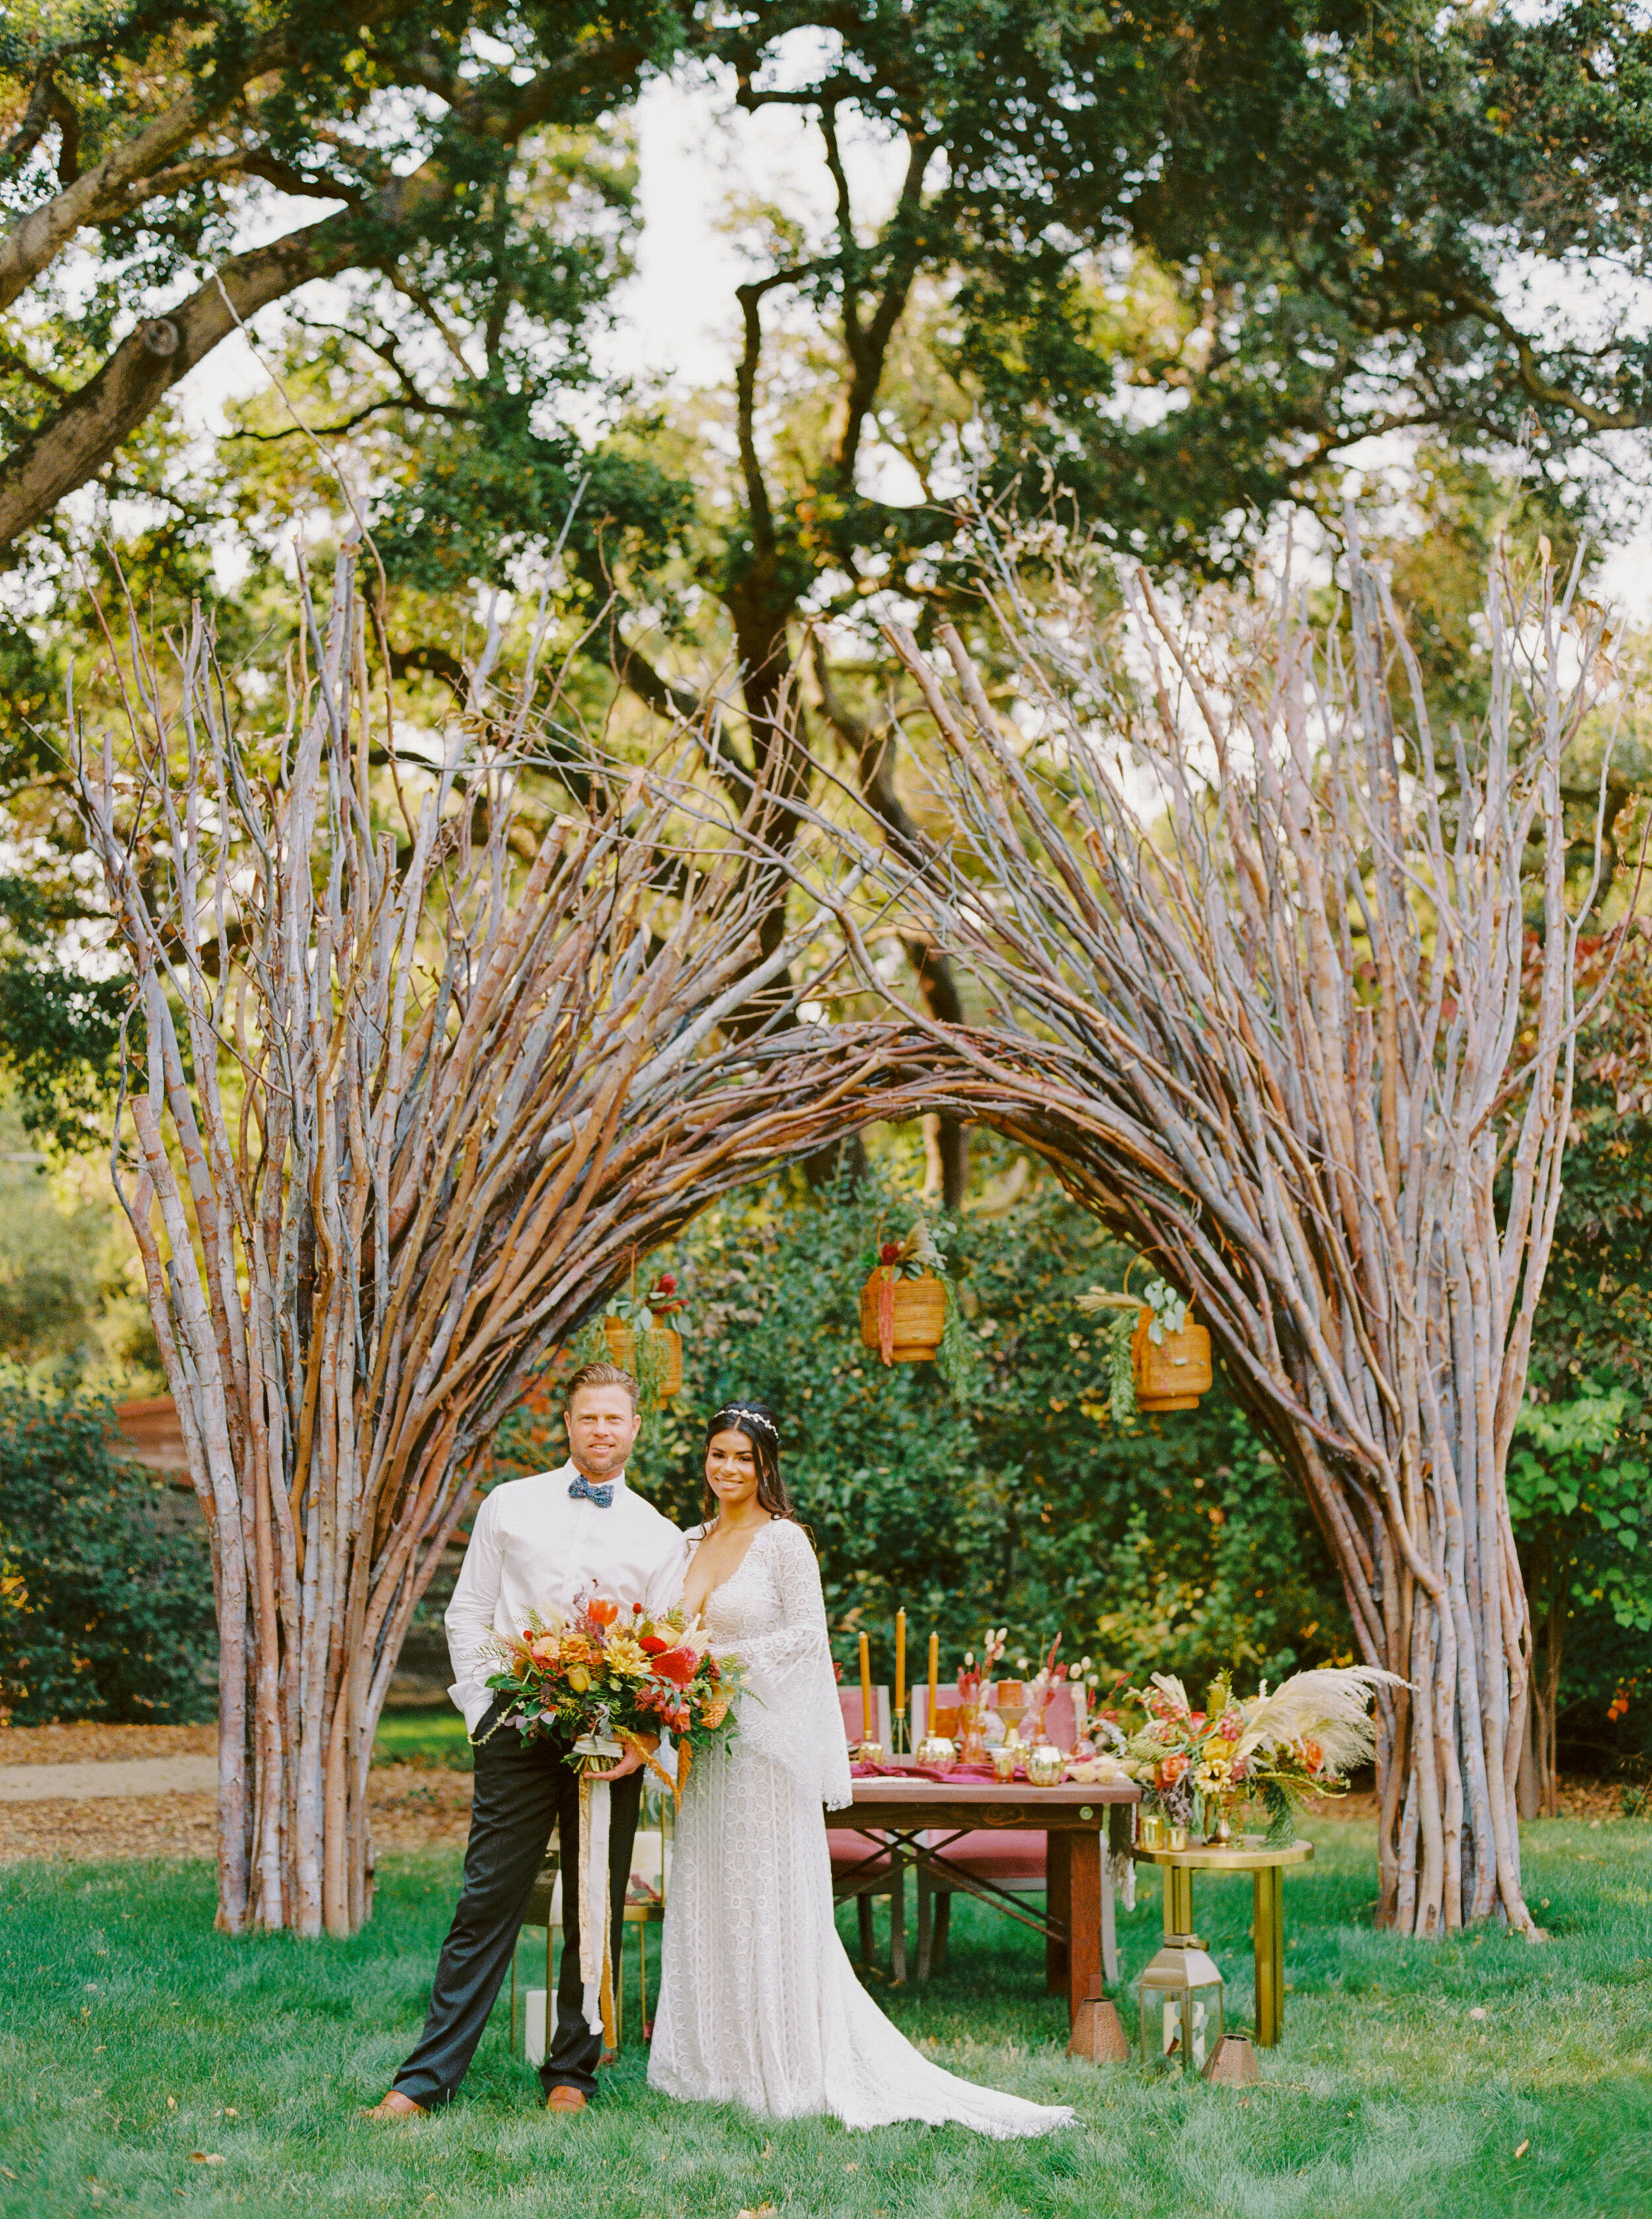 Sarahi Hadden - An Earthy Summer Boho Inspired Wedding with Sunset Hues at Gardener Ranch-117.jpg